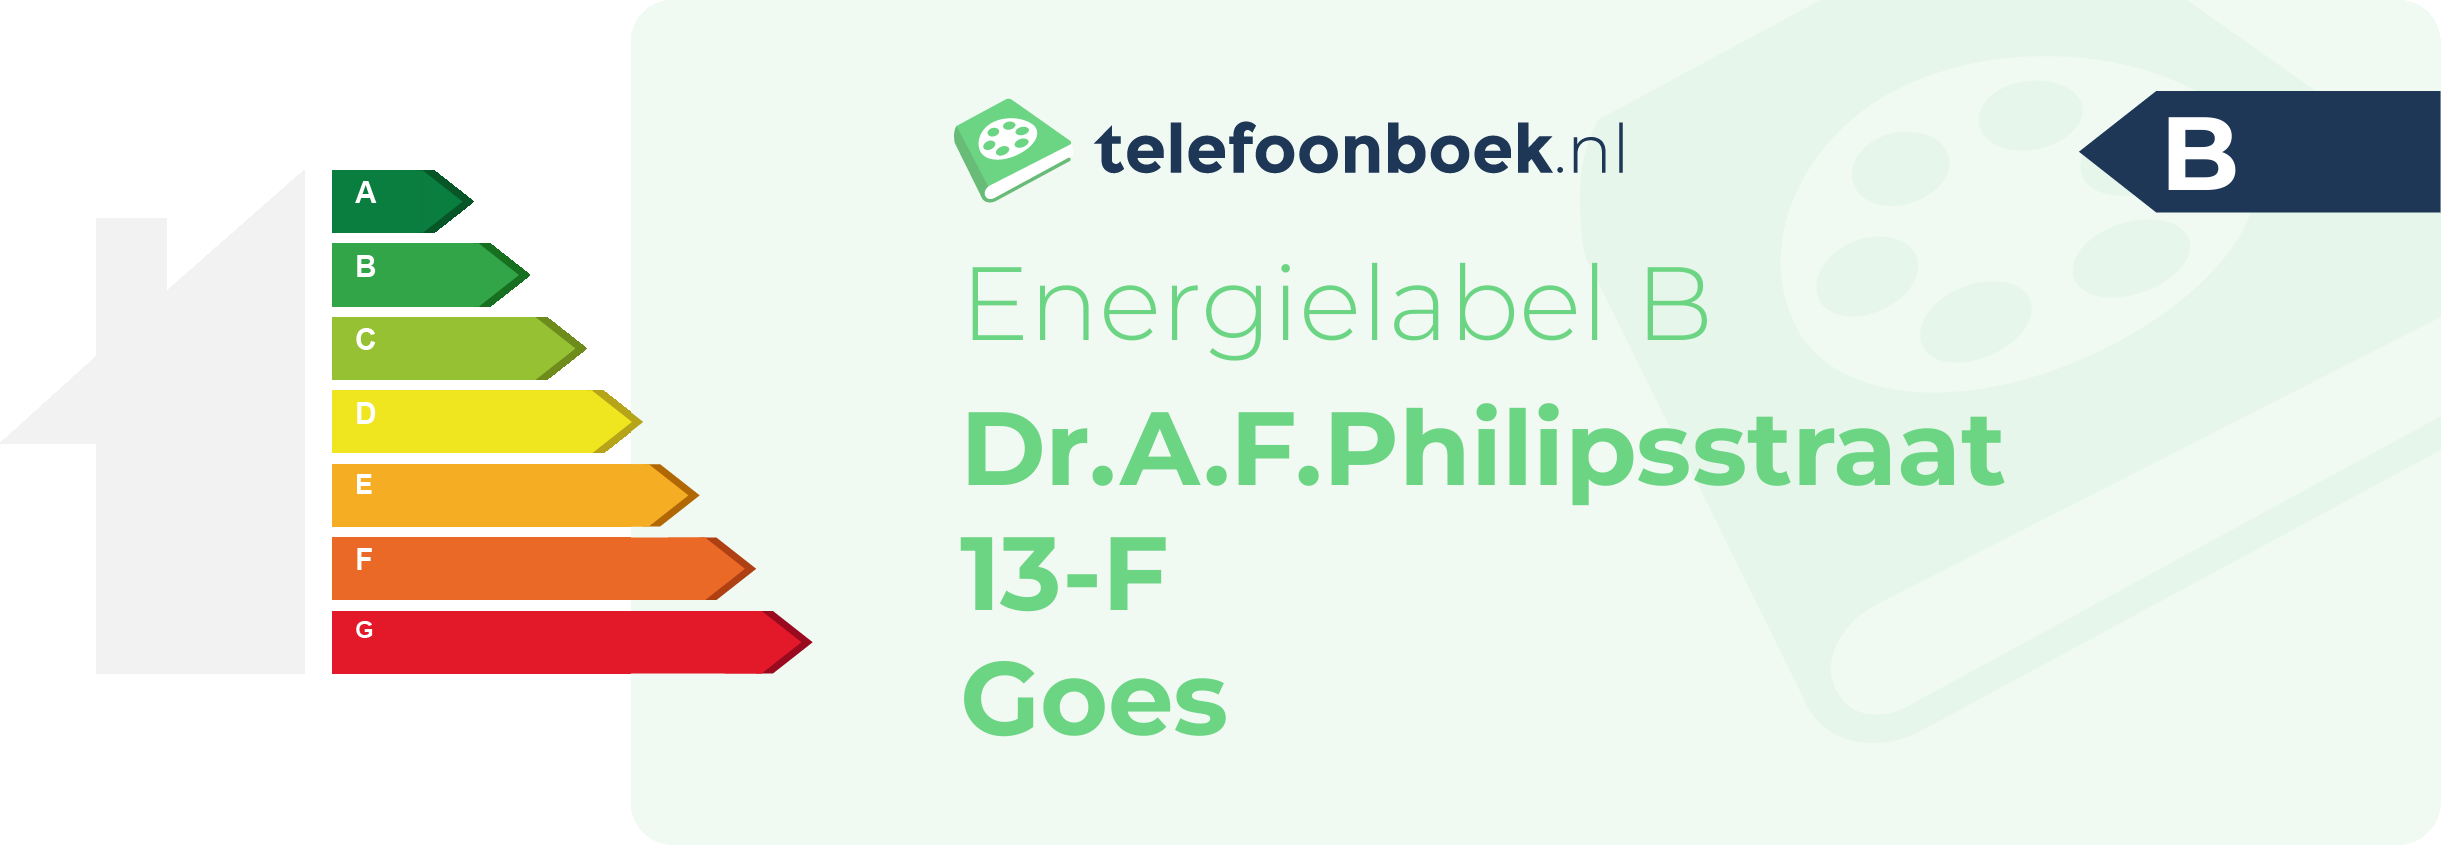 Energielabel Dr.A.F.Philipsstraat 13-F Goes